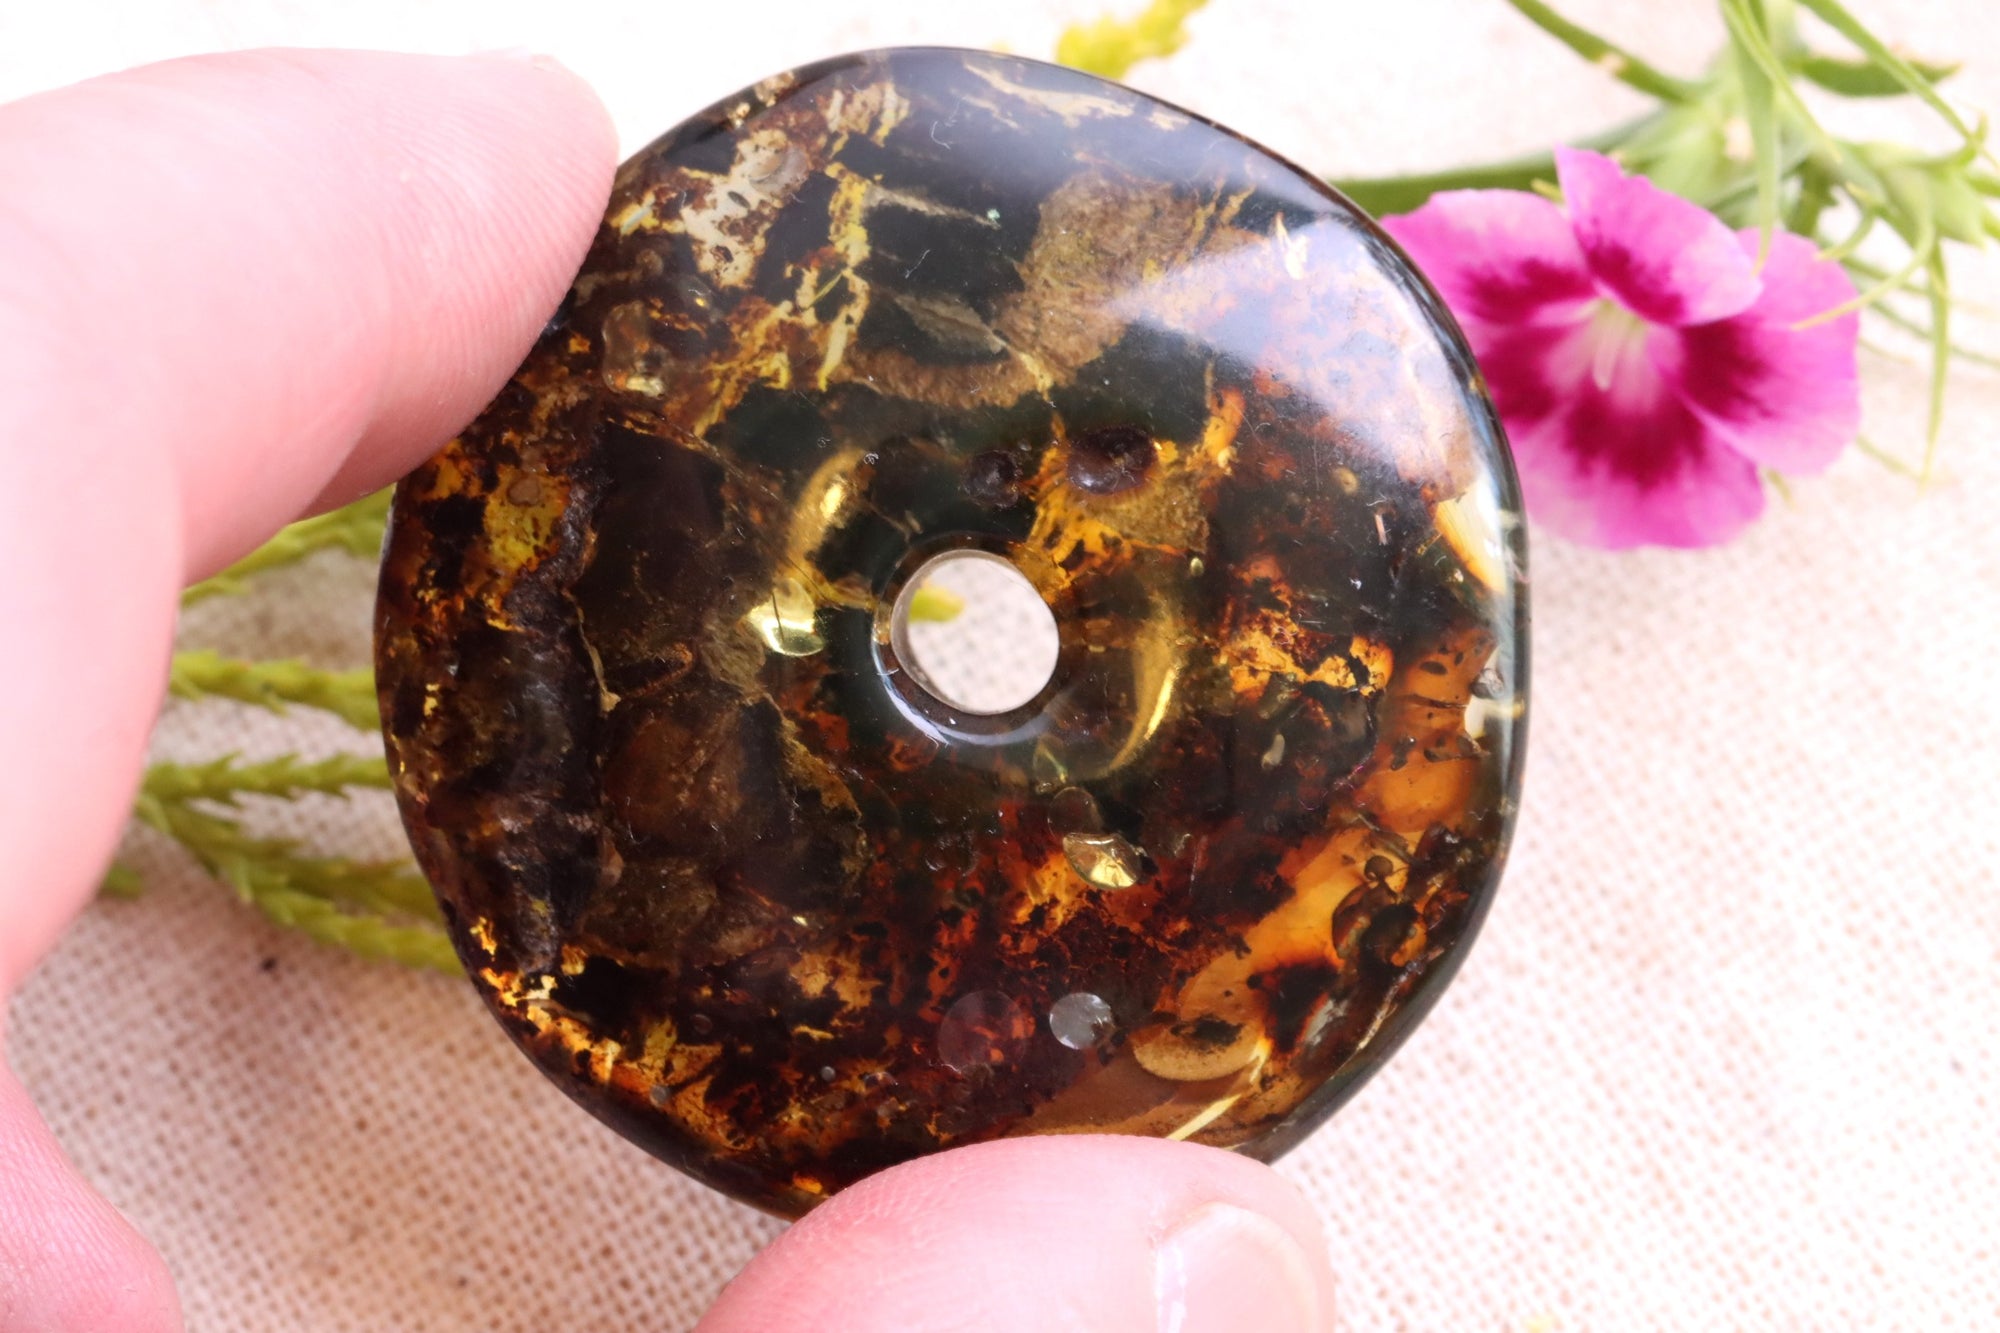 Healing Energy Natural Baltic Amber Gem Donut Amulet